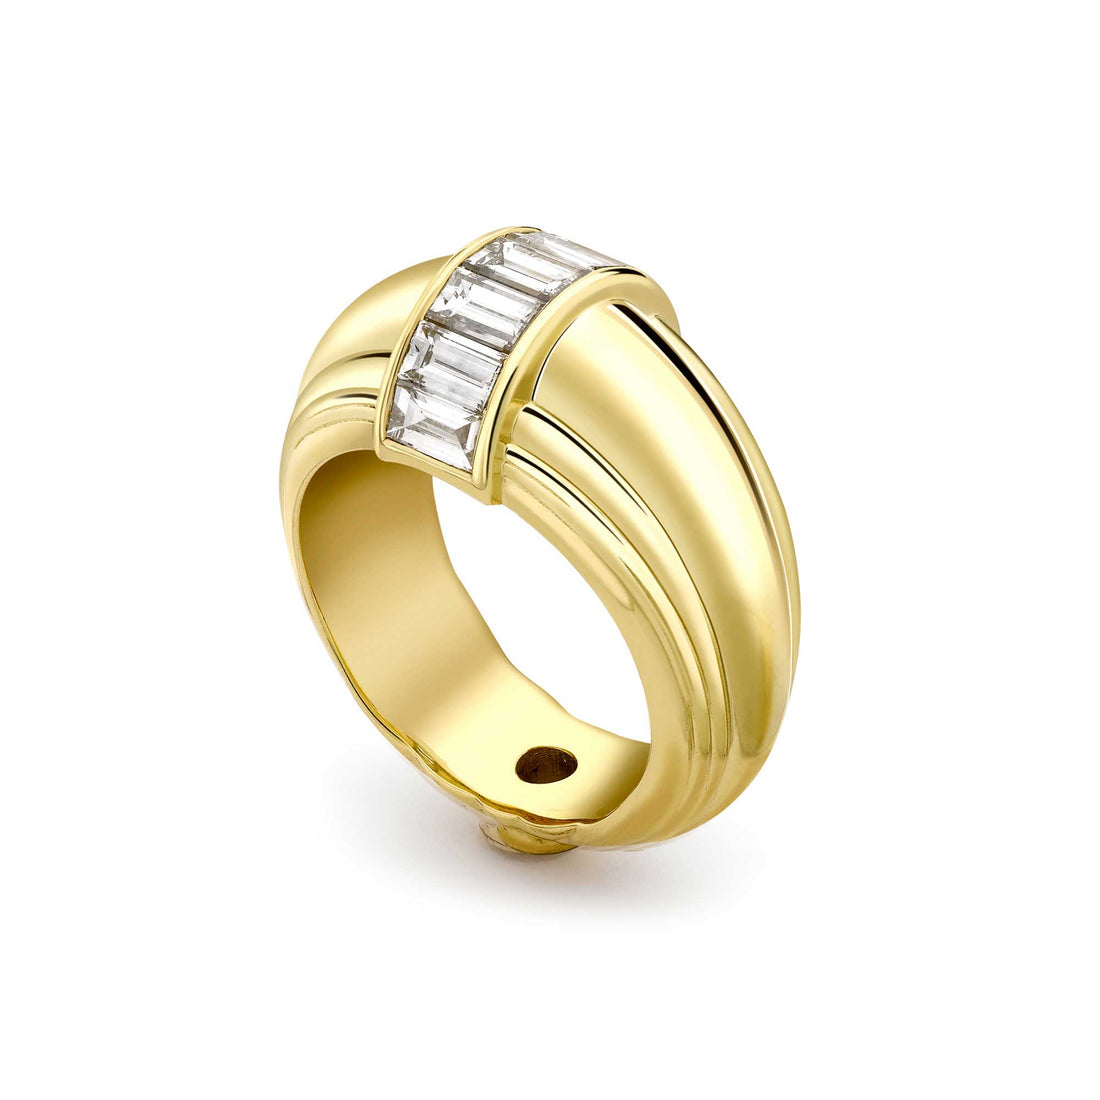  Bridge Diamond Engagement Ring by Emma Franklin | The Cut London